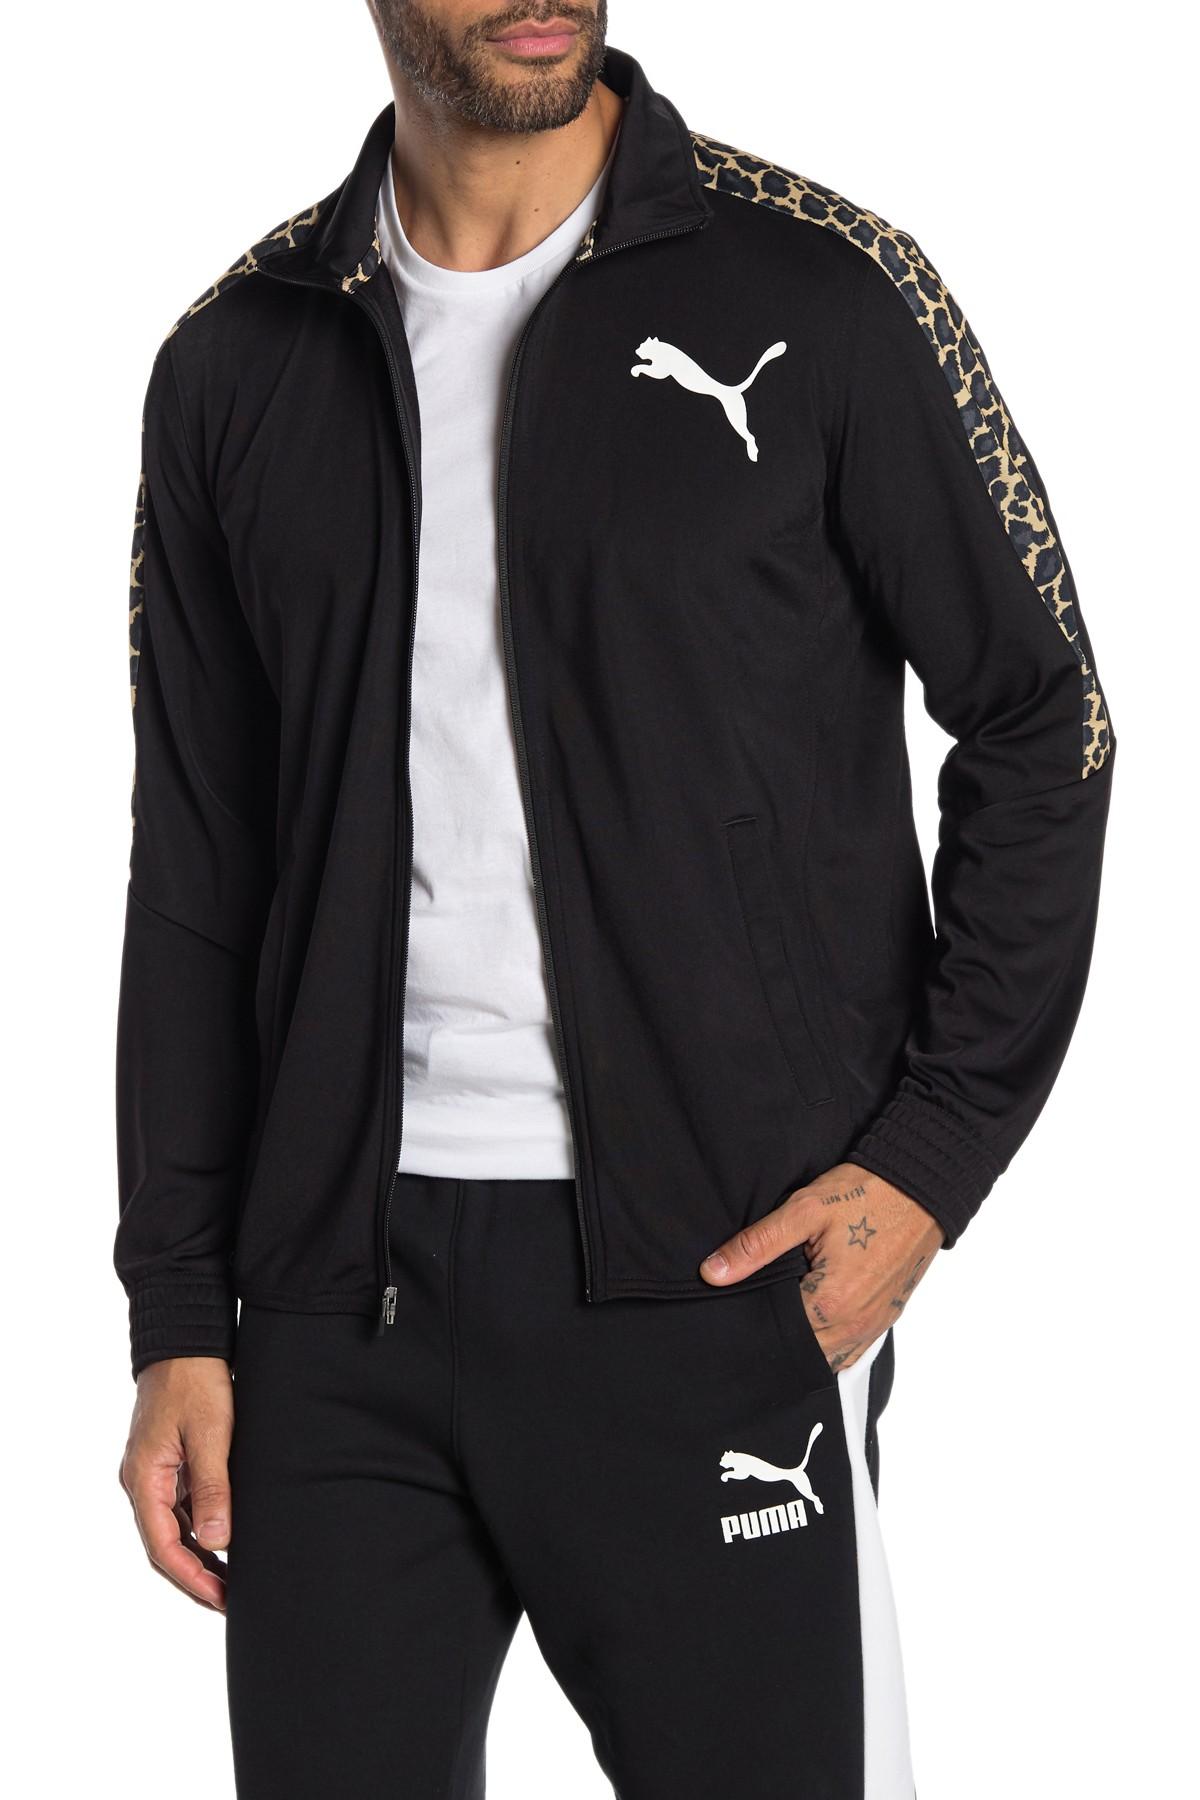 PUMA Cheetah-print Track Jacket in Black for Men | Lyst